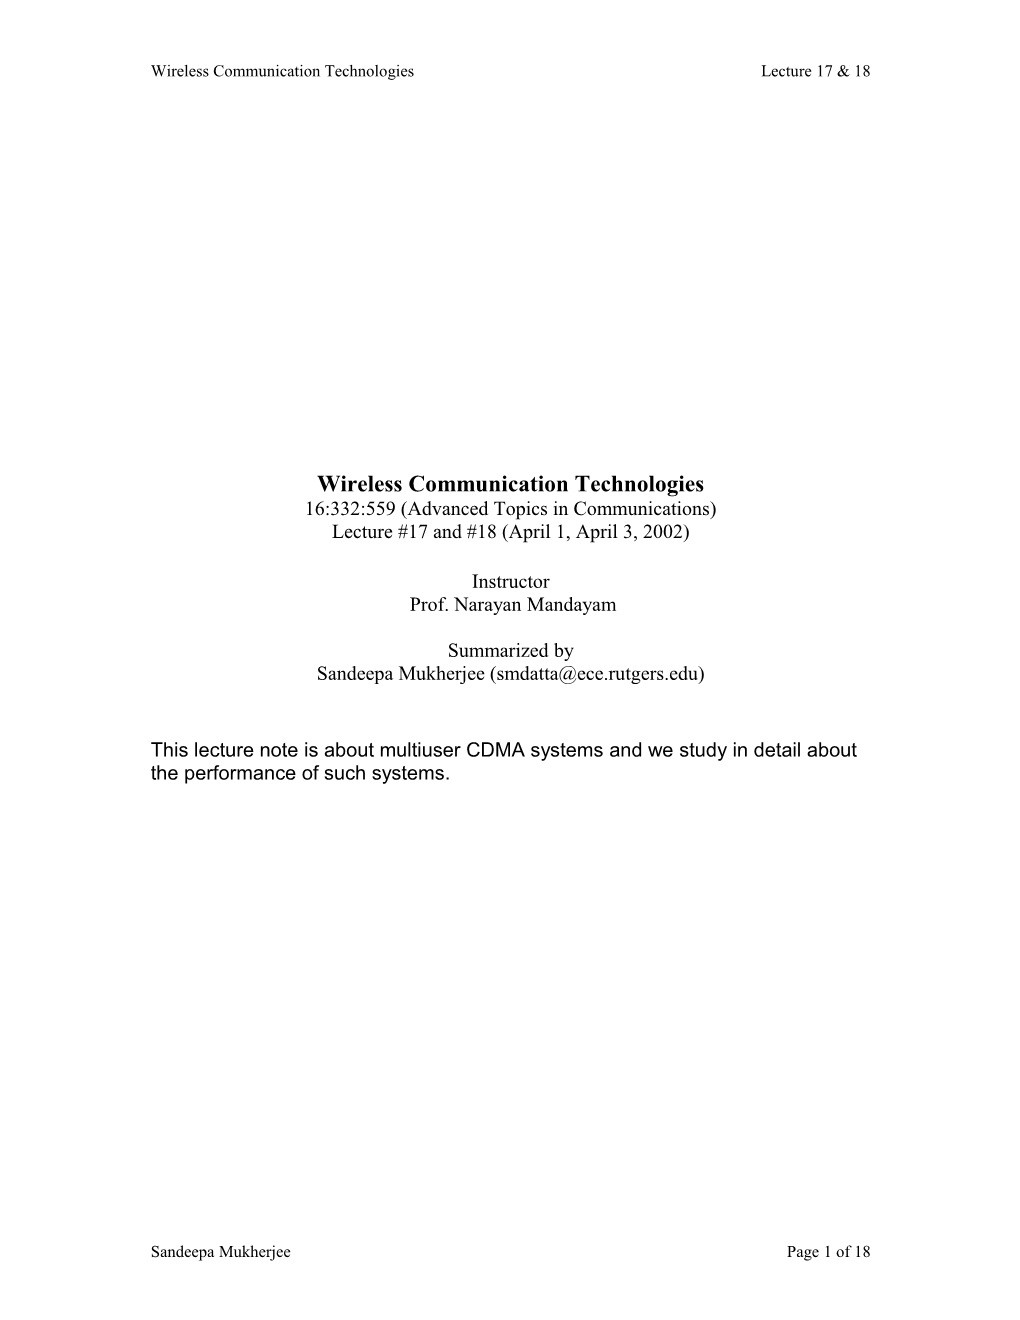 Wireless Communication Technologieslecture 17 & 18